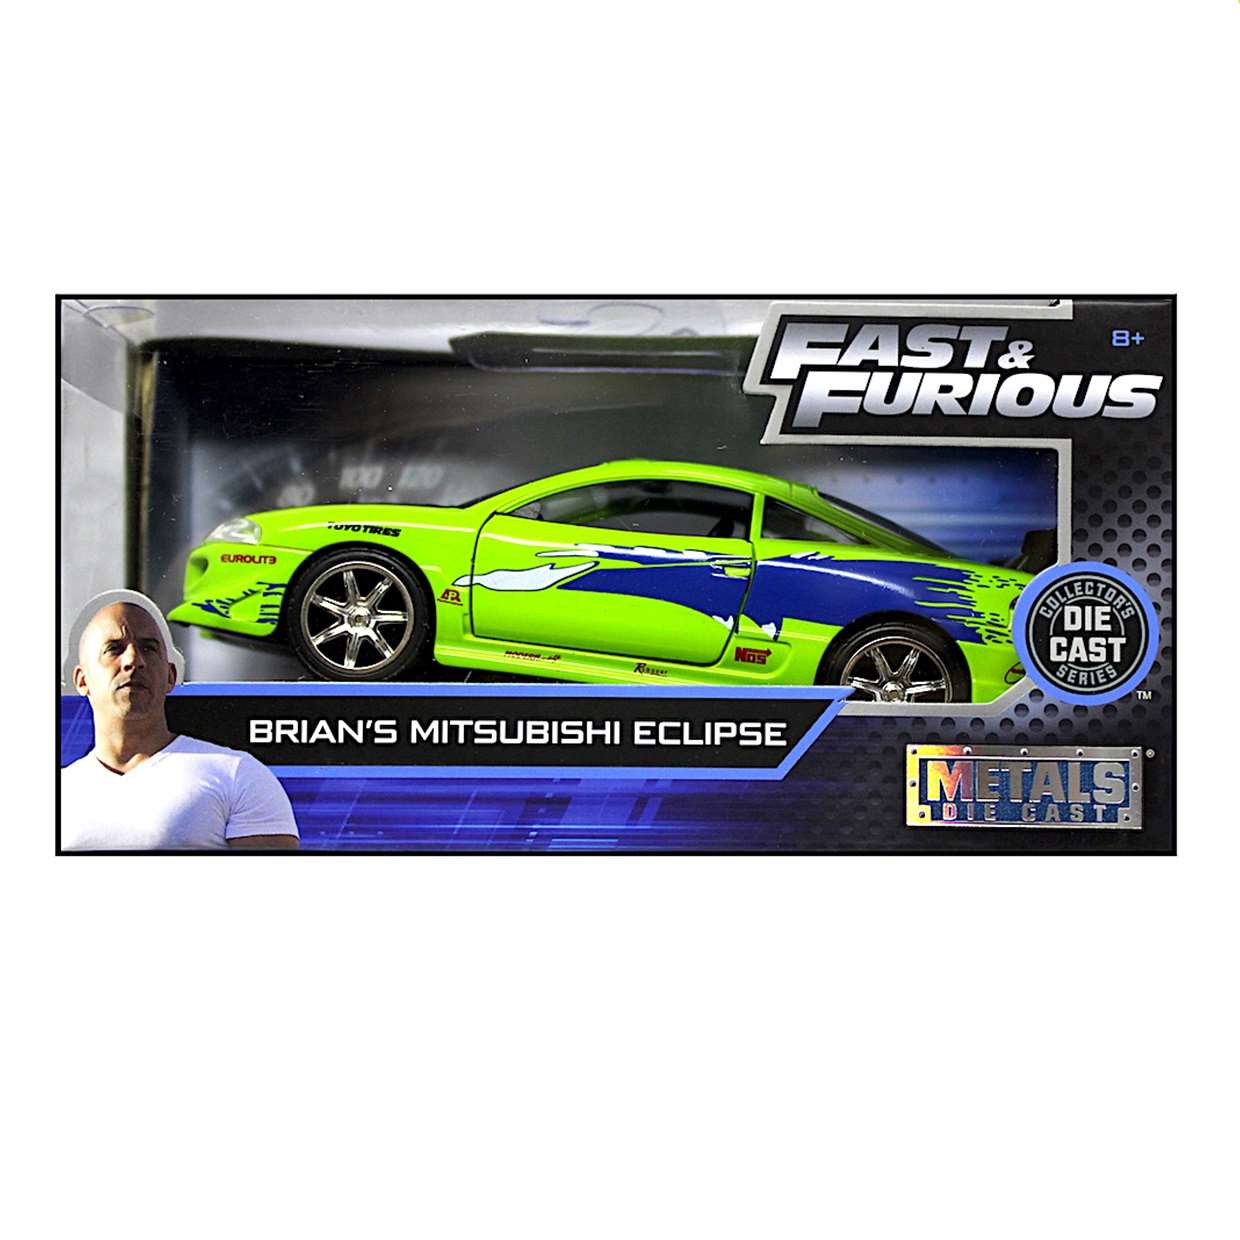 Brian's Mitsubishi Eclipse 1/24 Fast & Furious Jada Toys Metal Die Cast